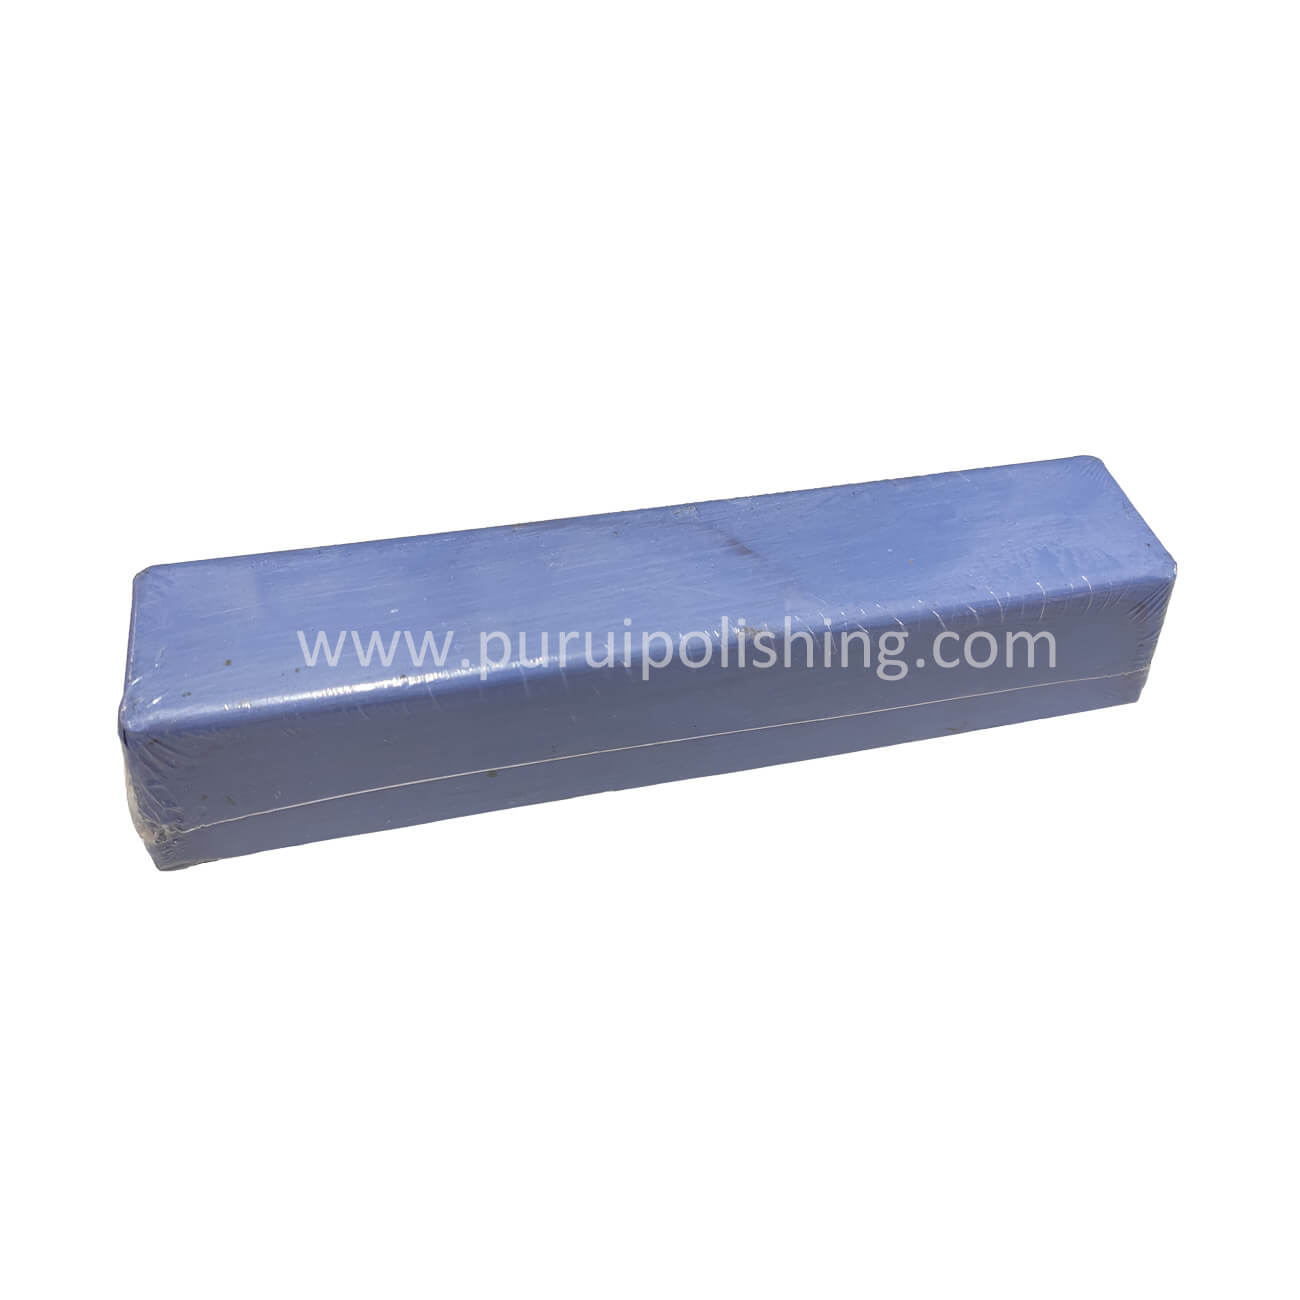 Wholesale All-Purpose Blue Polishing Compound